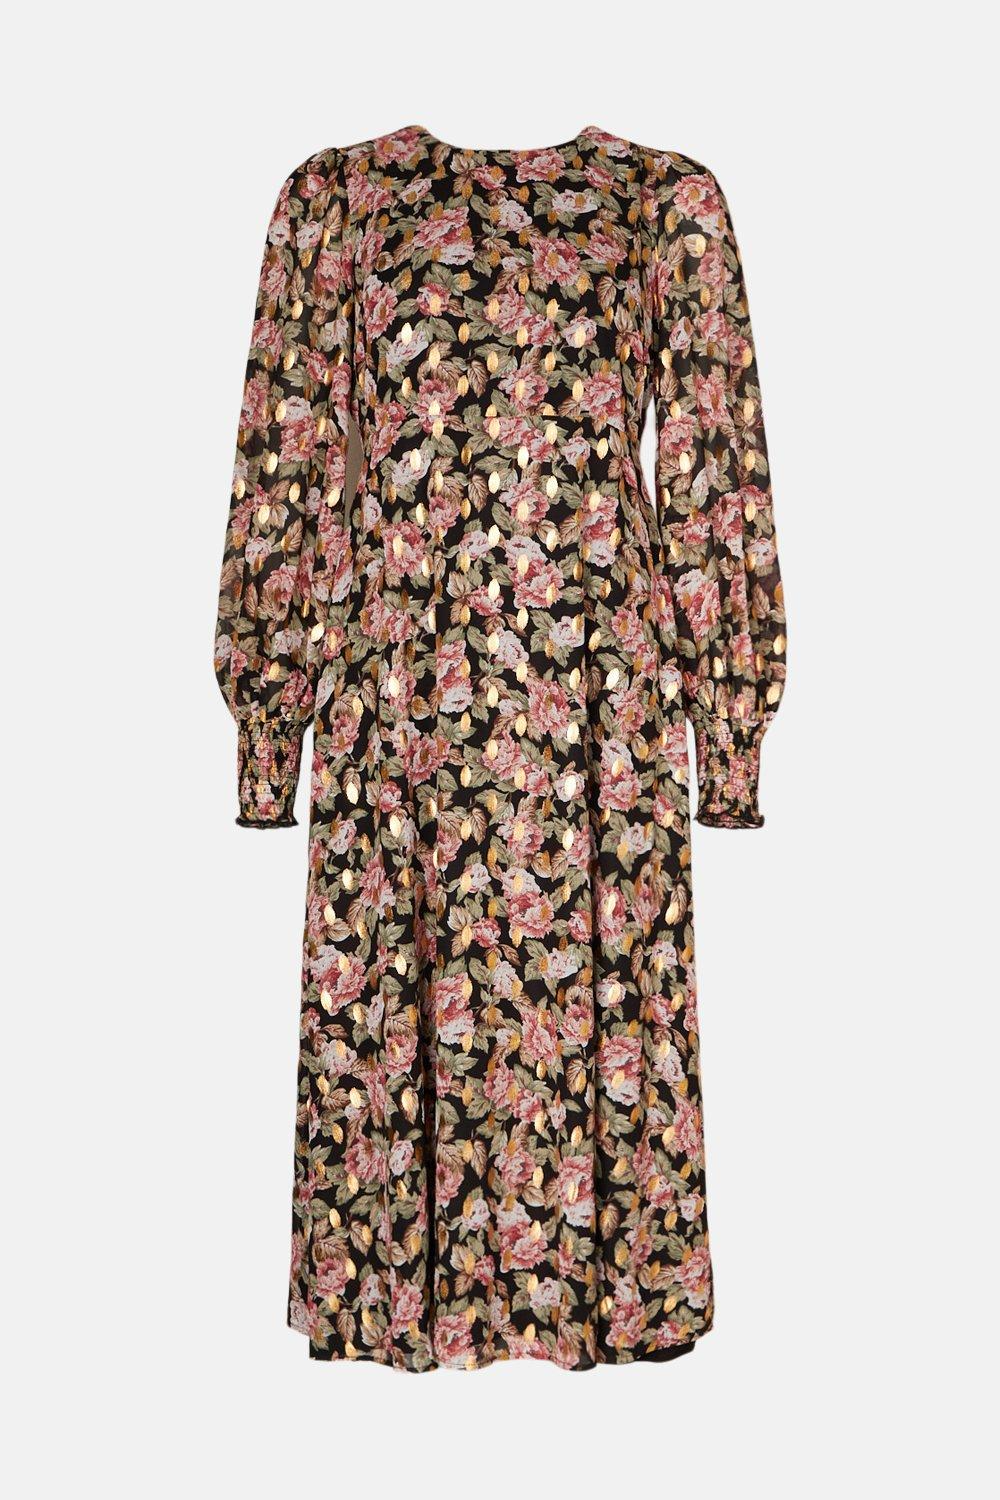 4.OASIS Foil Rose Printed Shirred Cuff Midi Dress €93, 